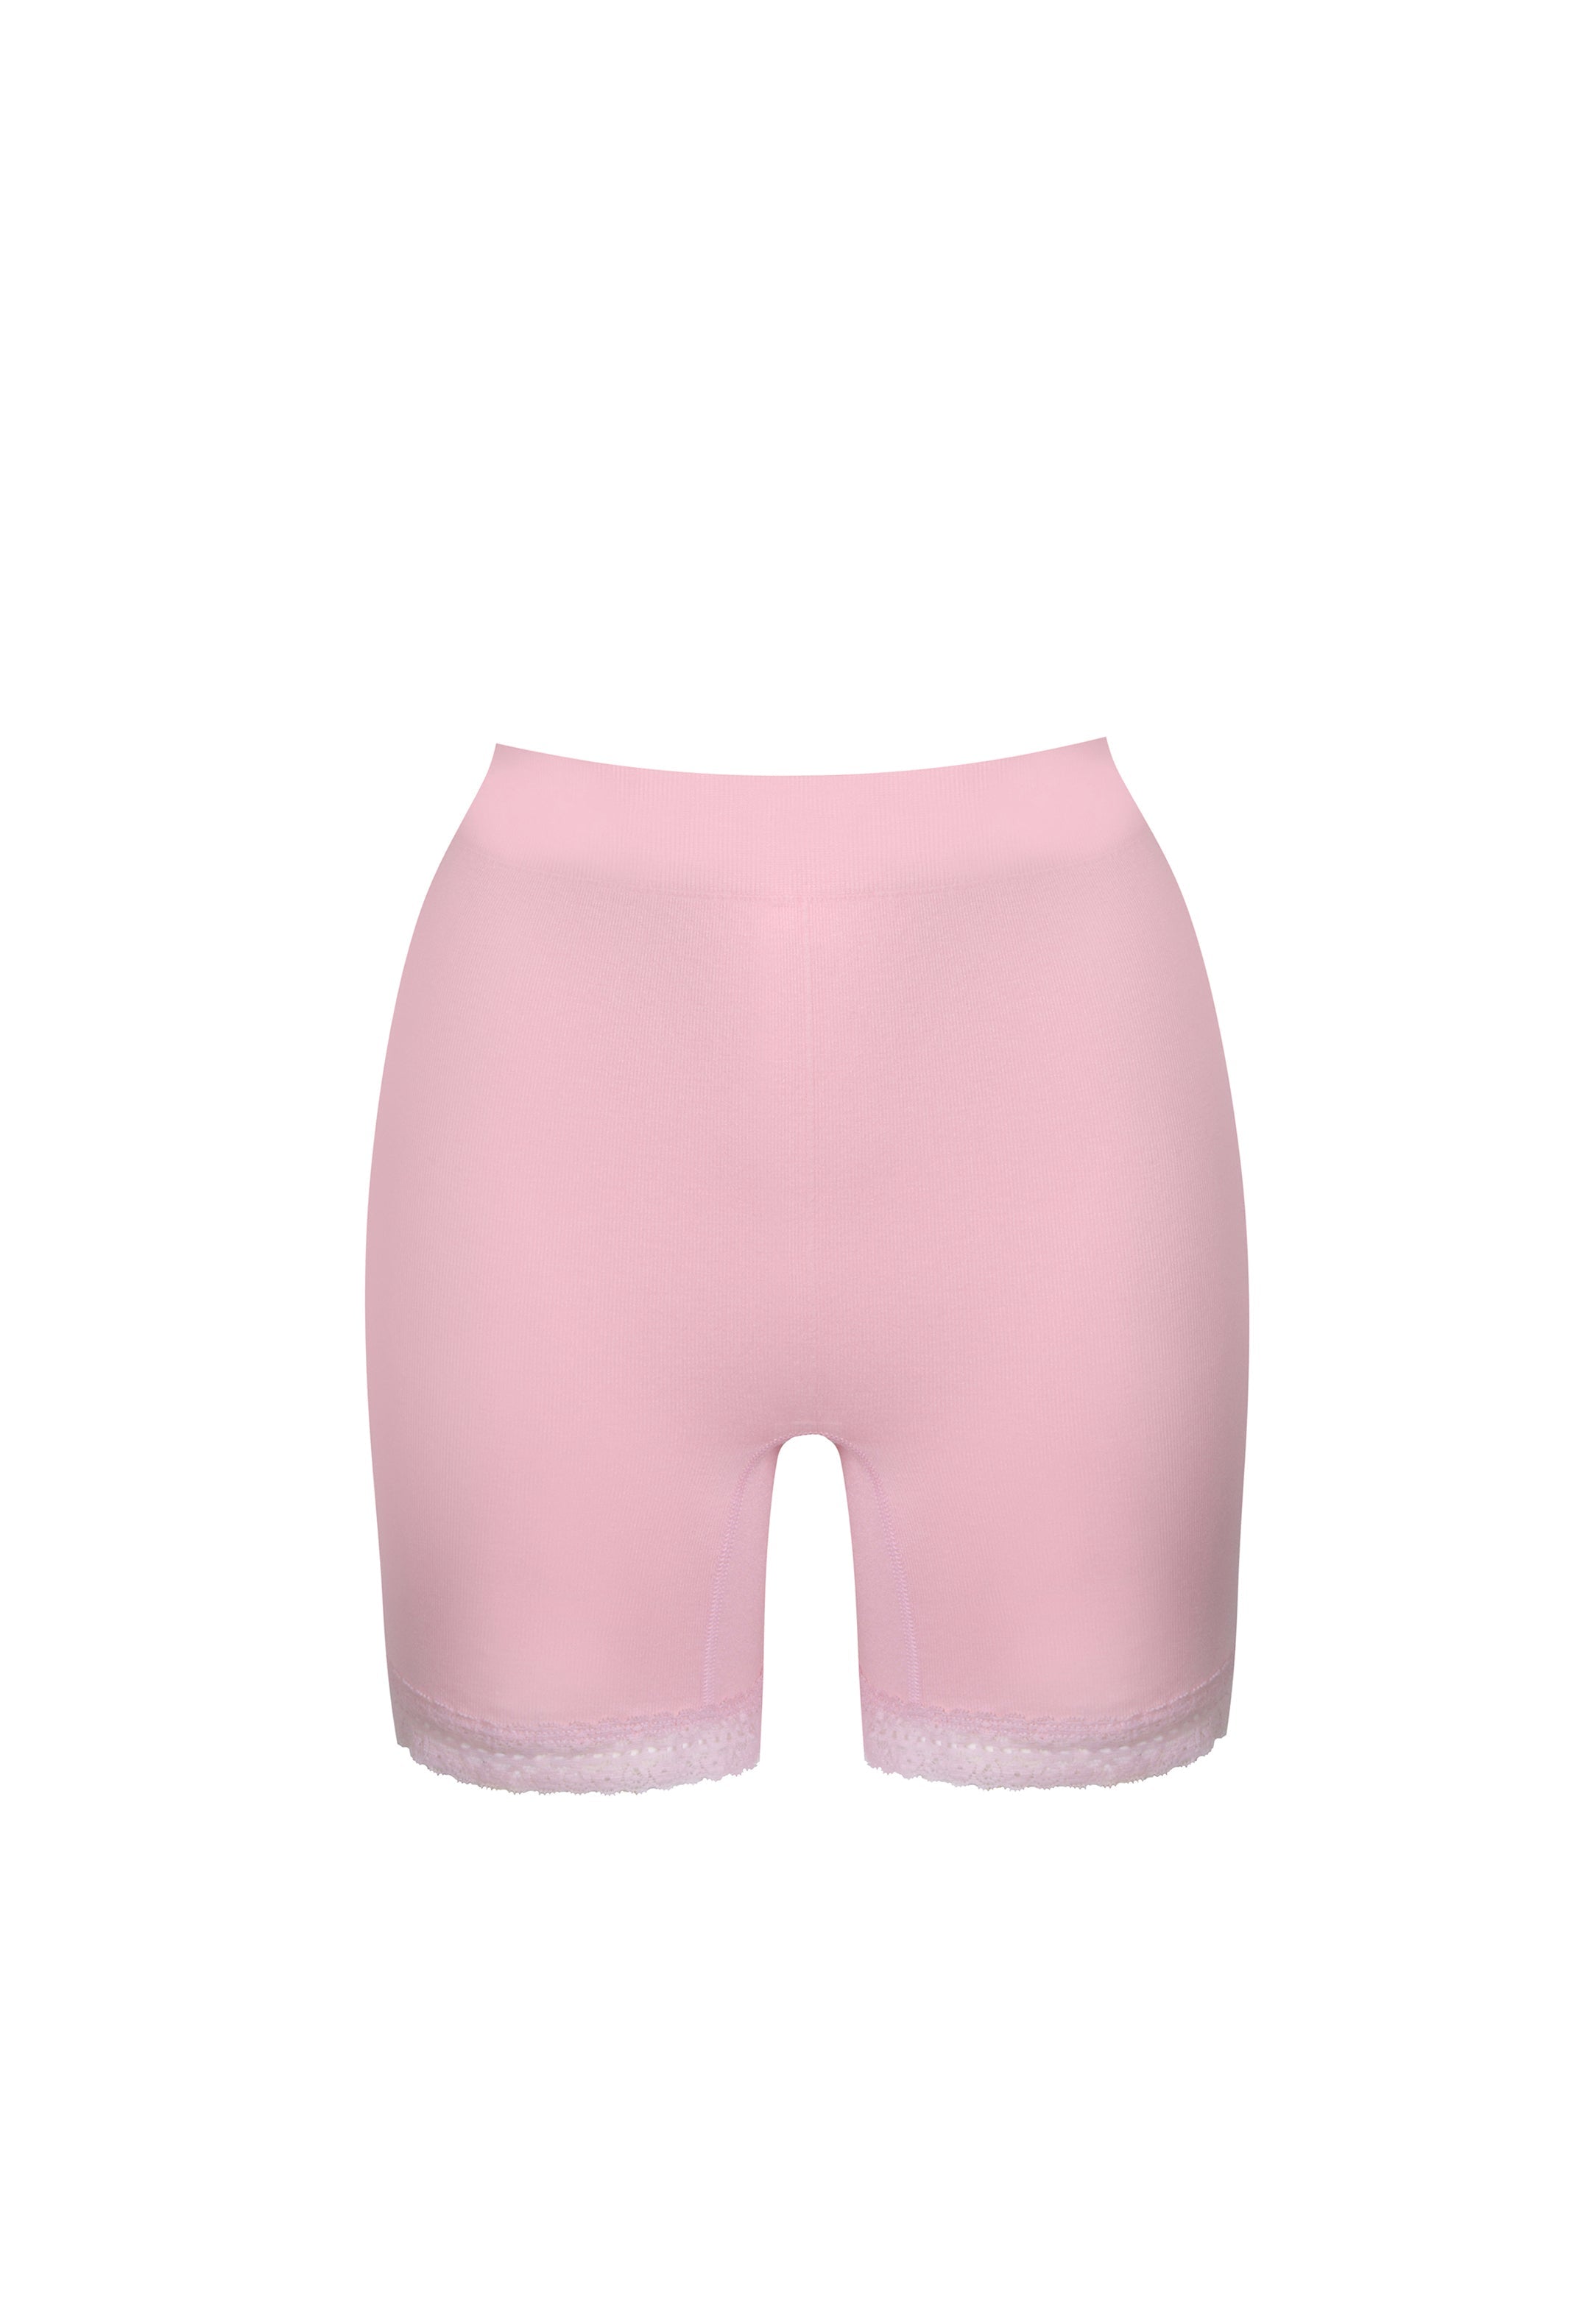 Blush Seamless Shorts